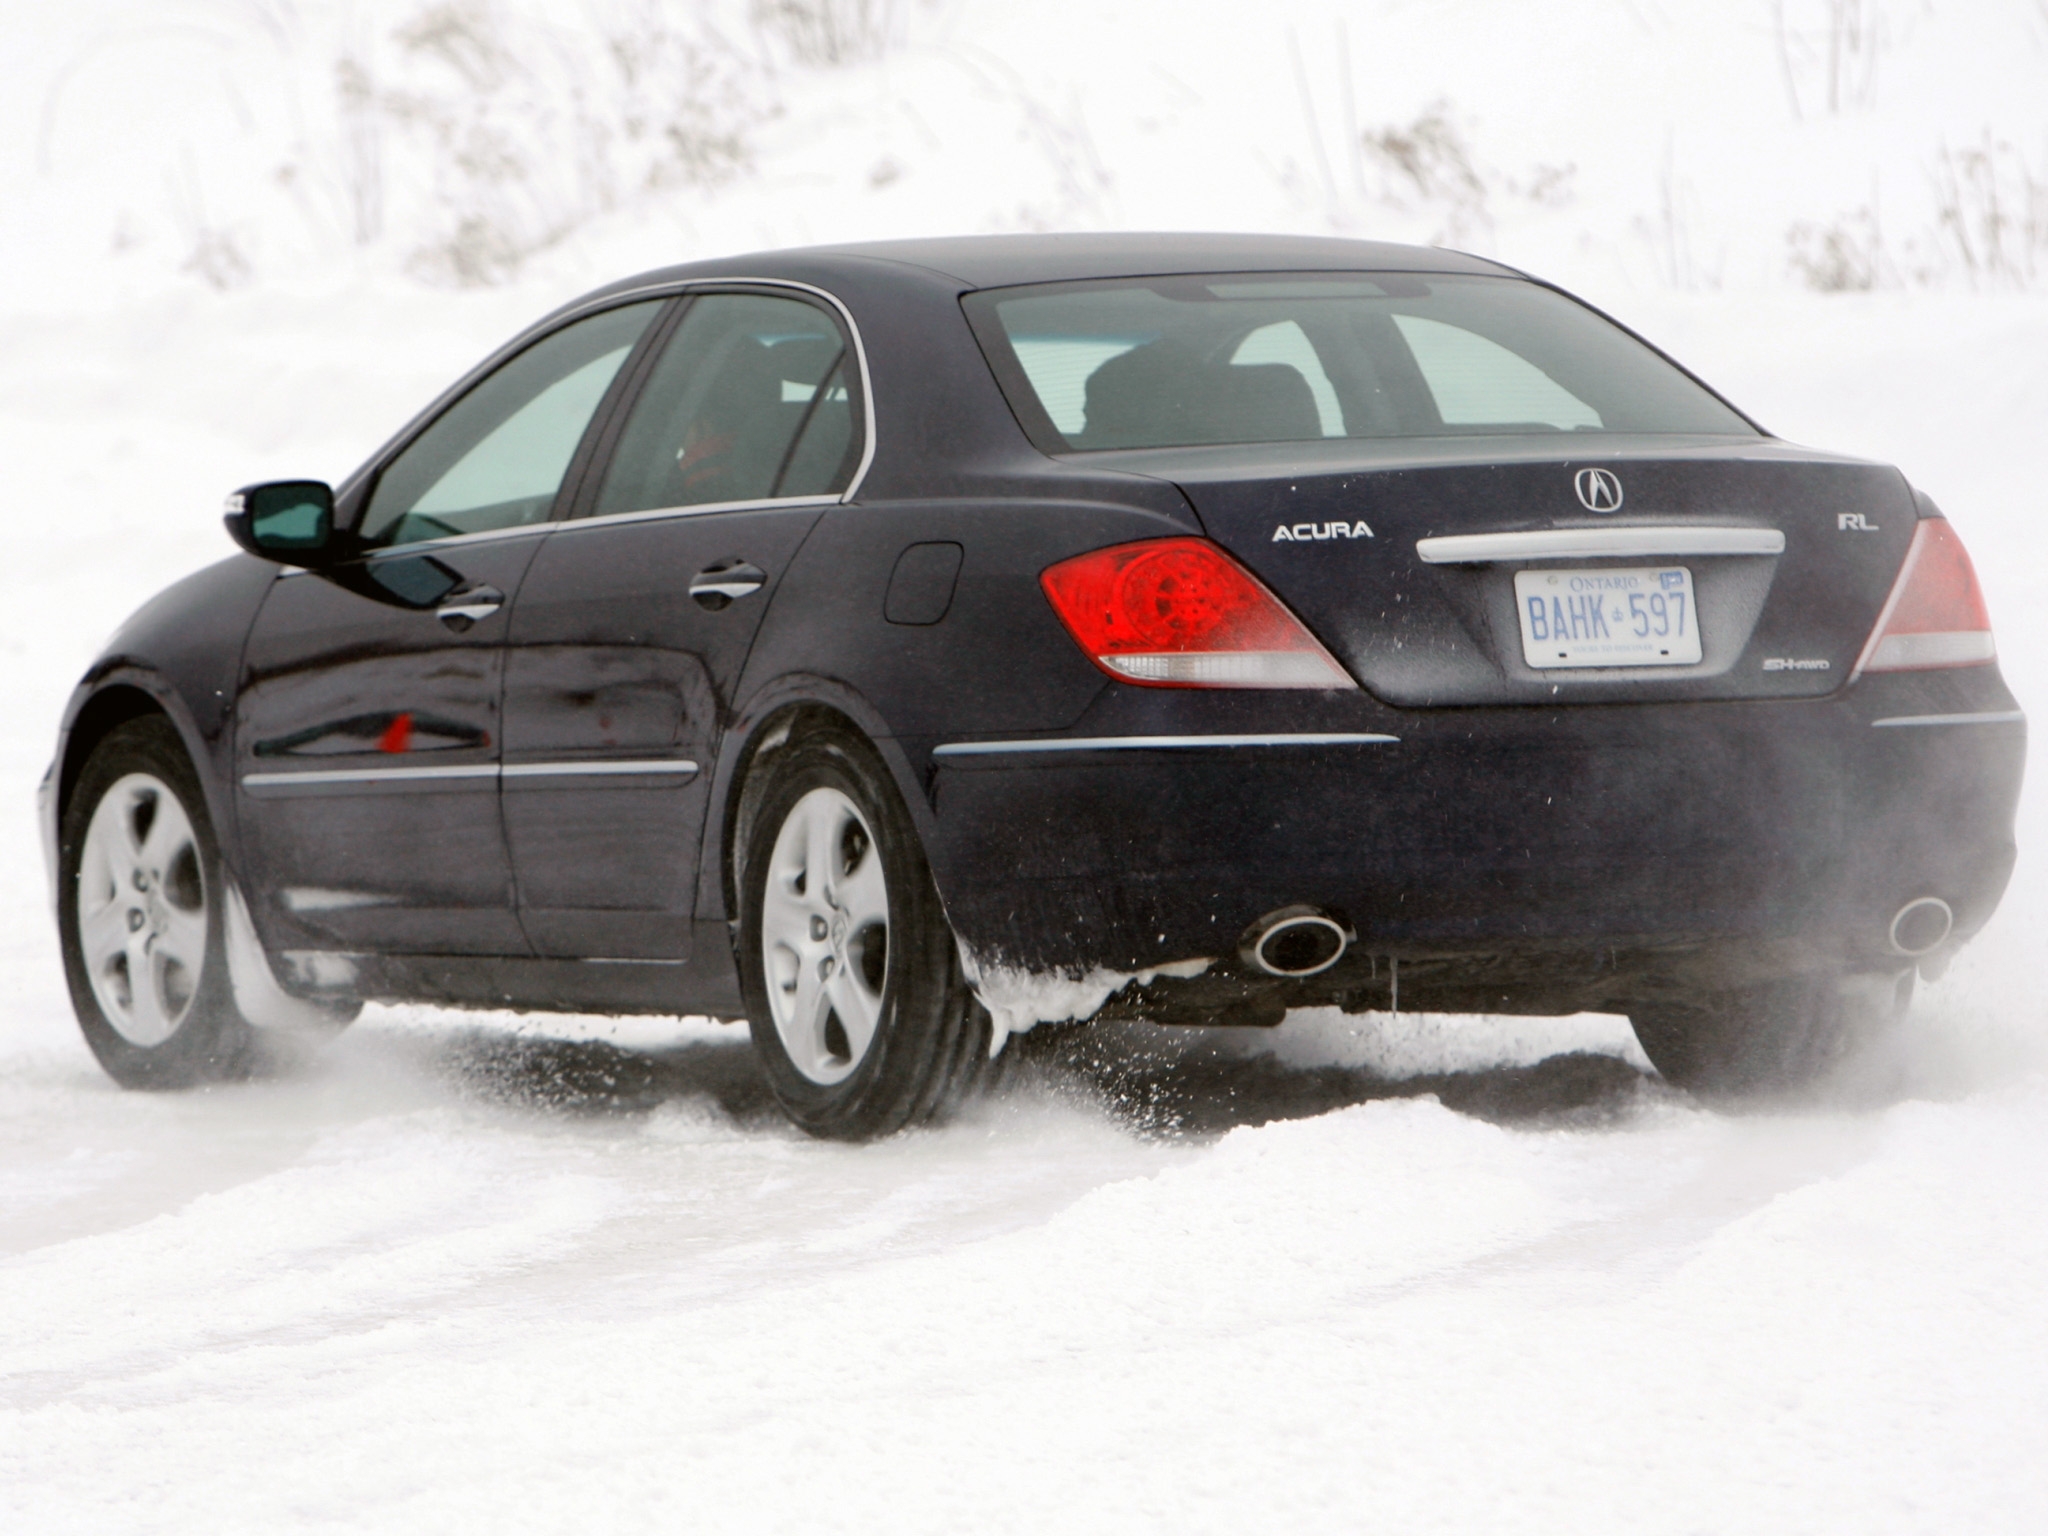 auto, acura, snow, cars, black, traffic, movement, back view, rear view, style, akura, rl